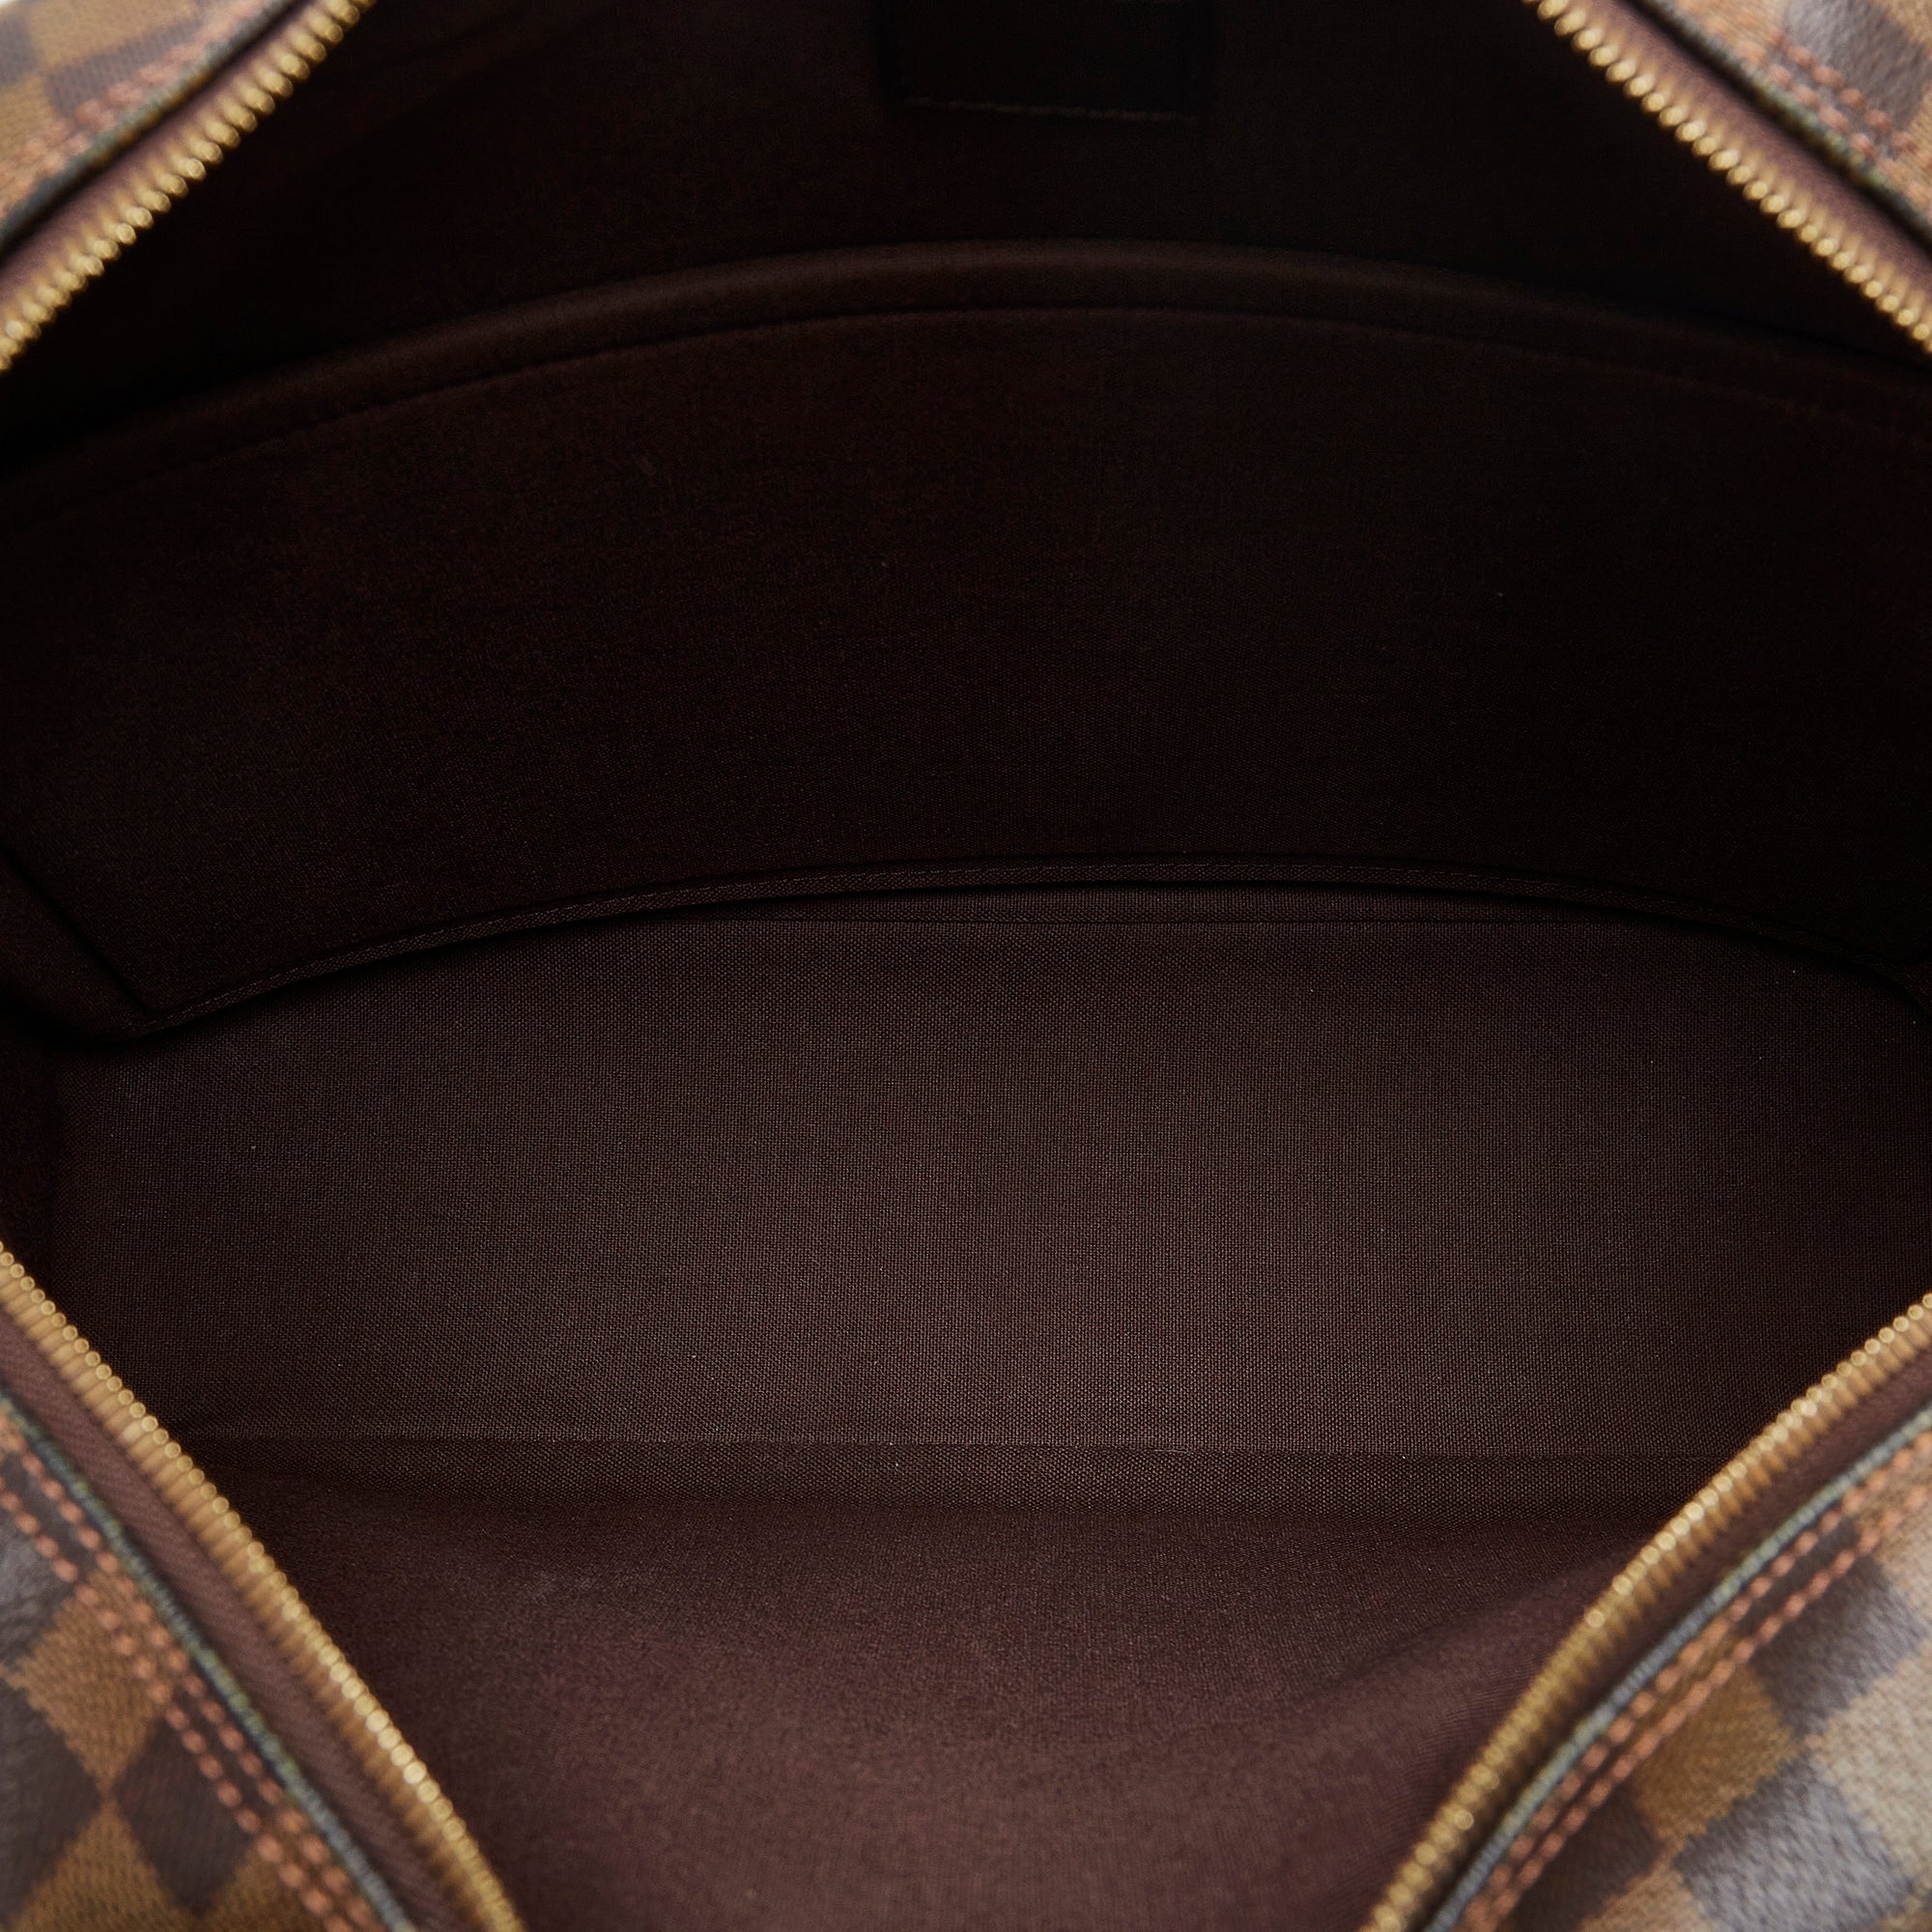 Brown Louis Vuitton Damier Ebene Icare Business Bag